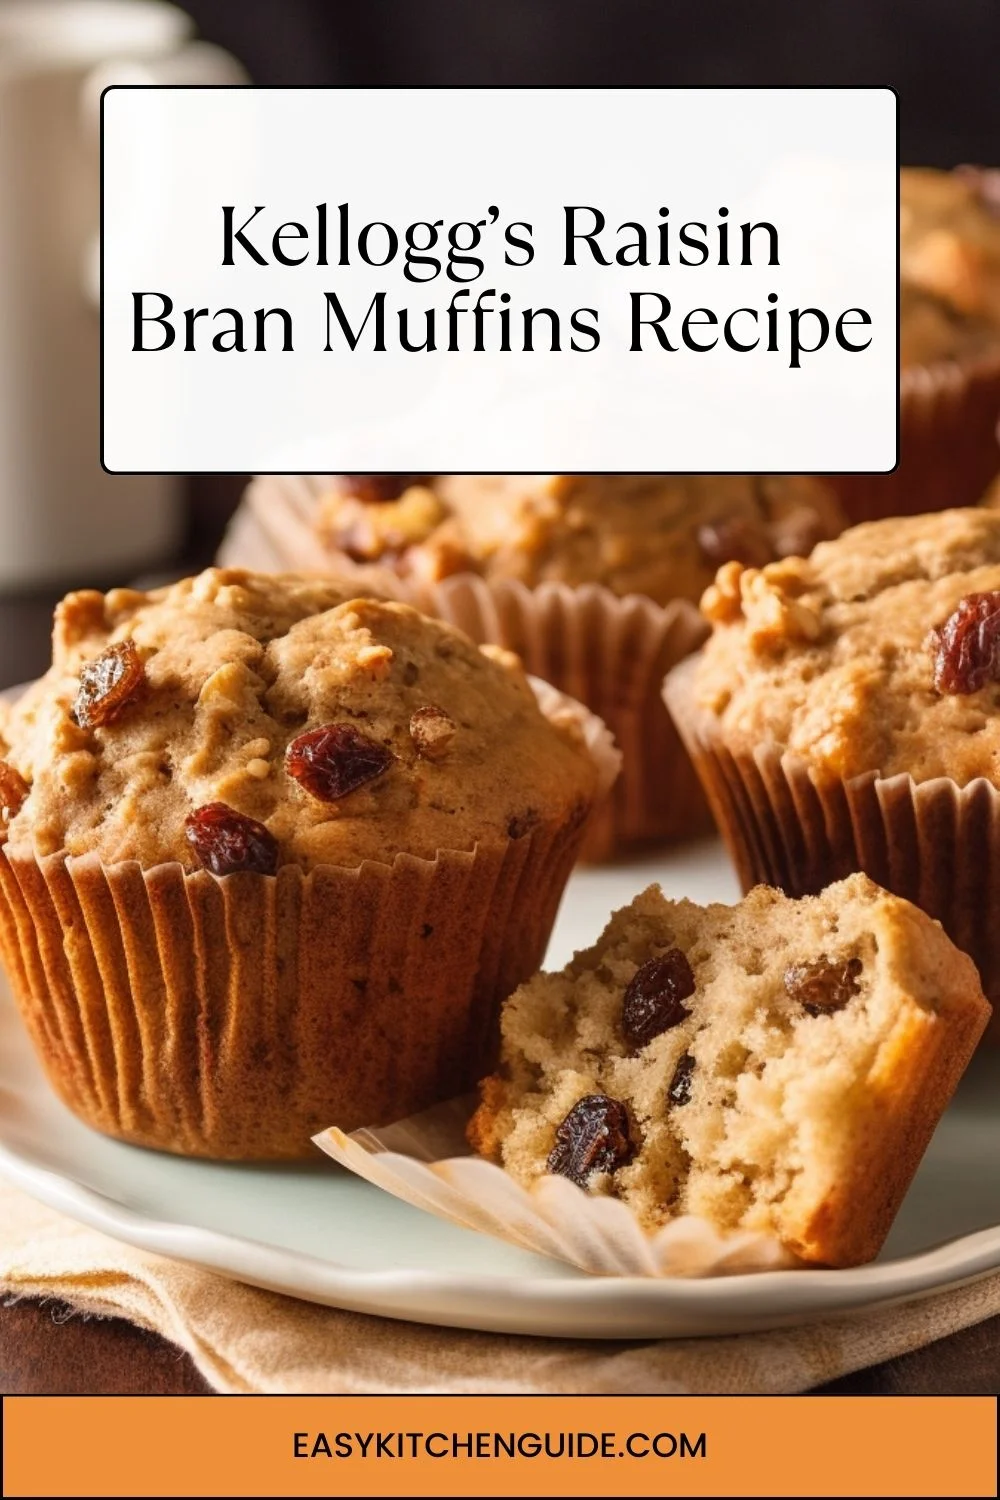 Kellogg’s Raisin Bran Muffins Recipe